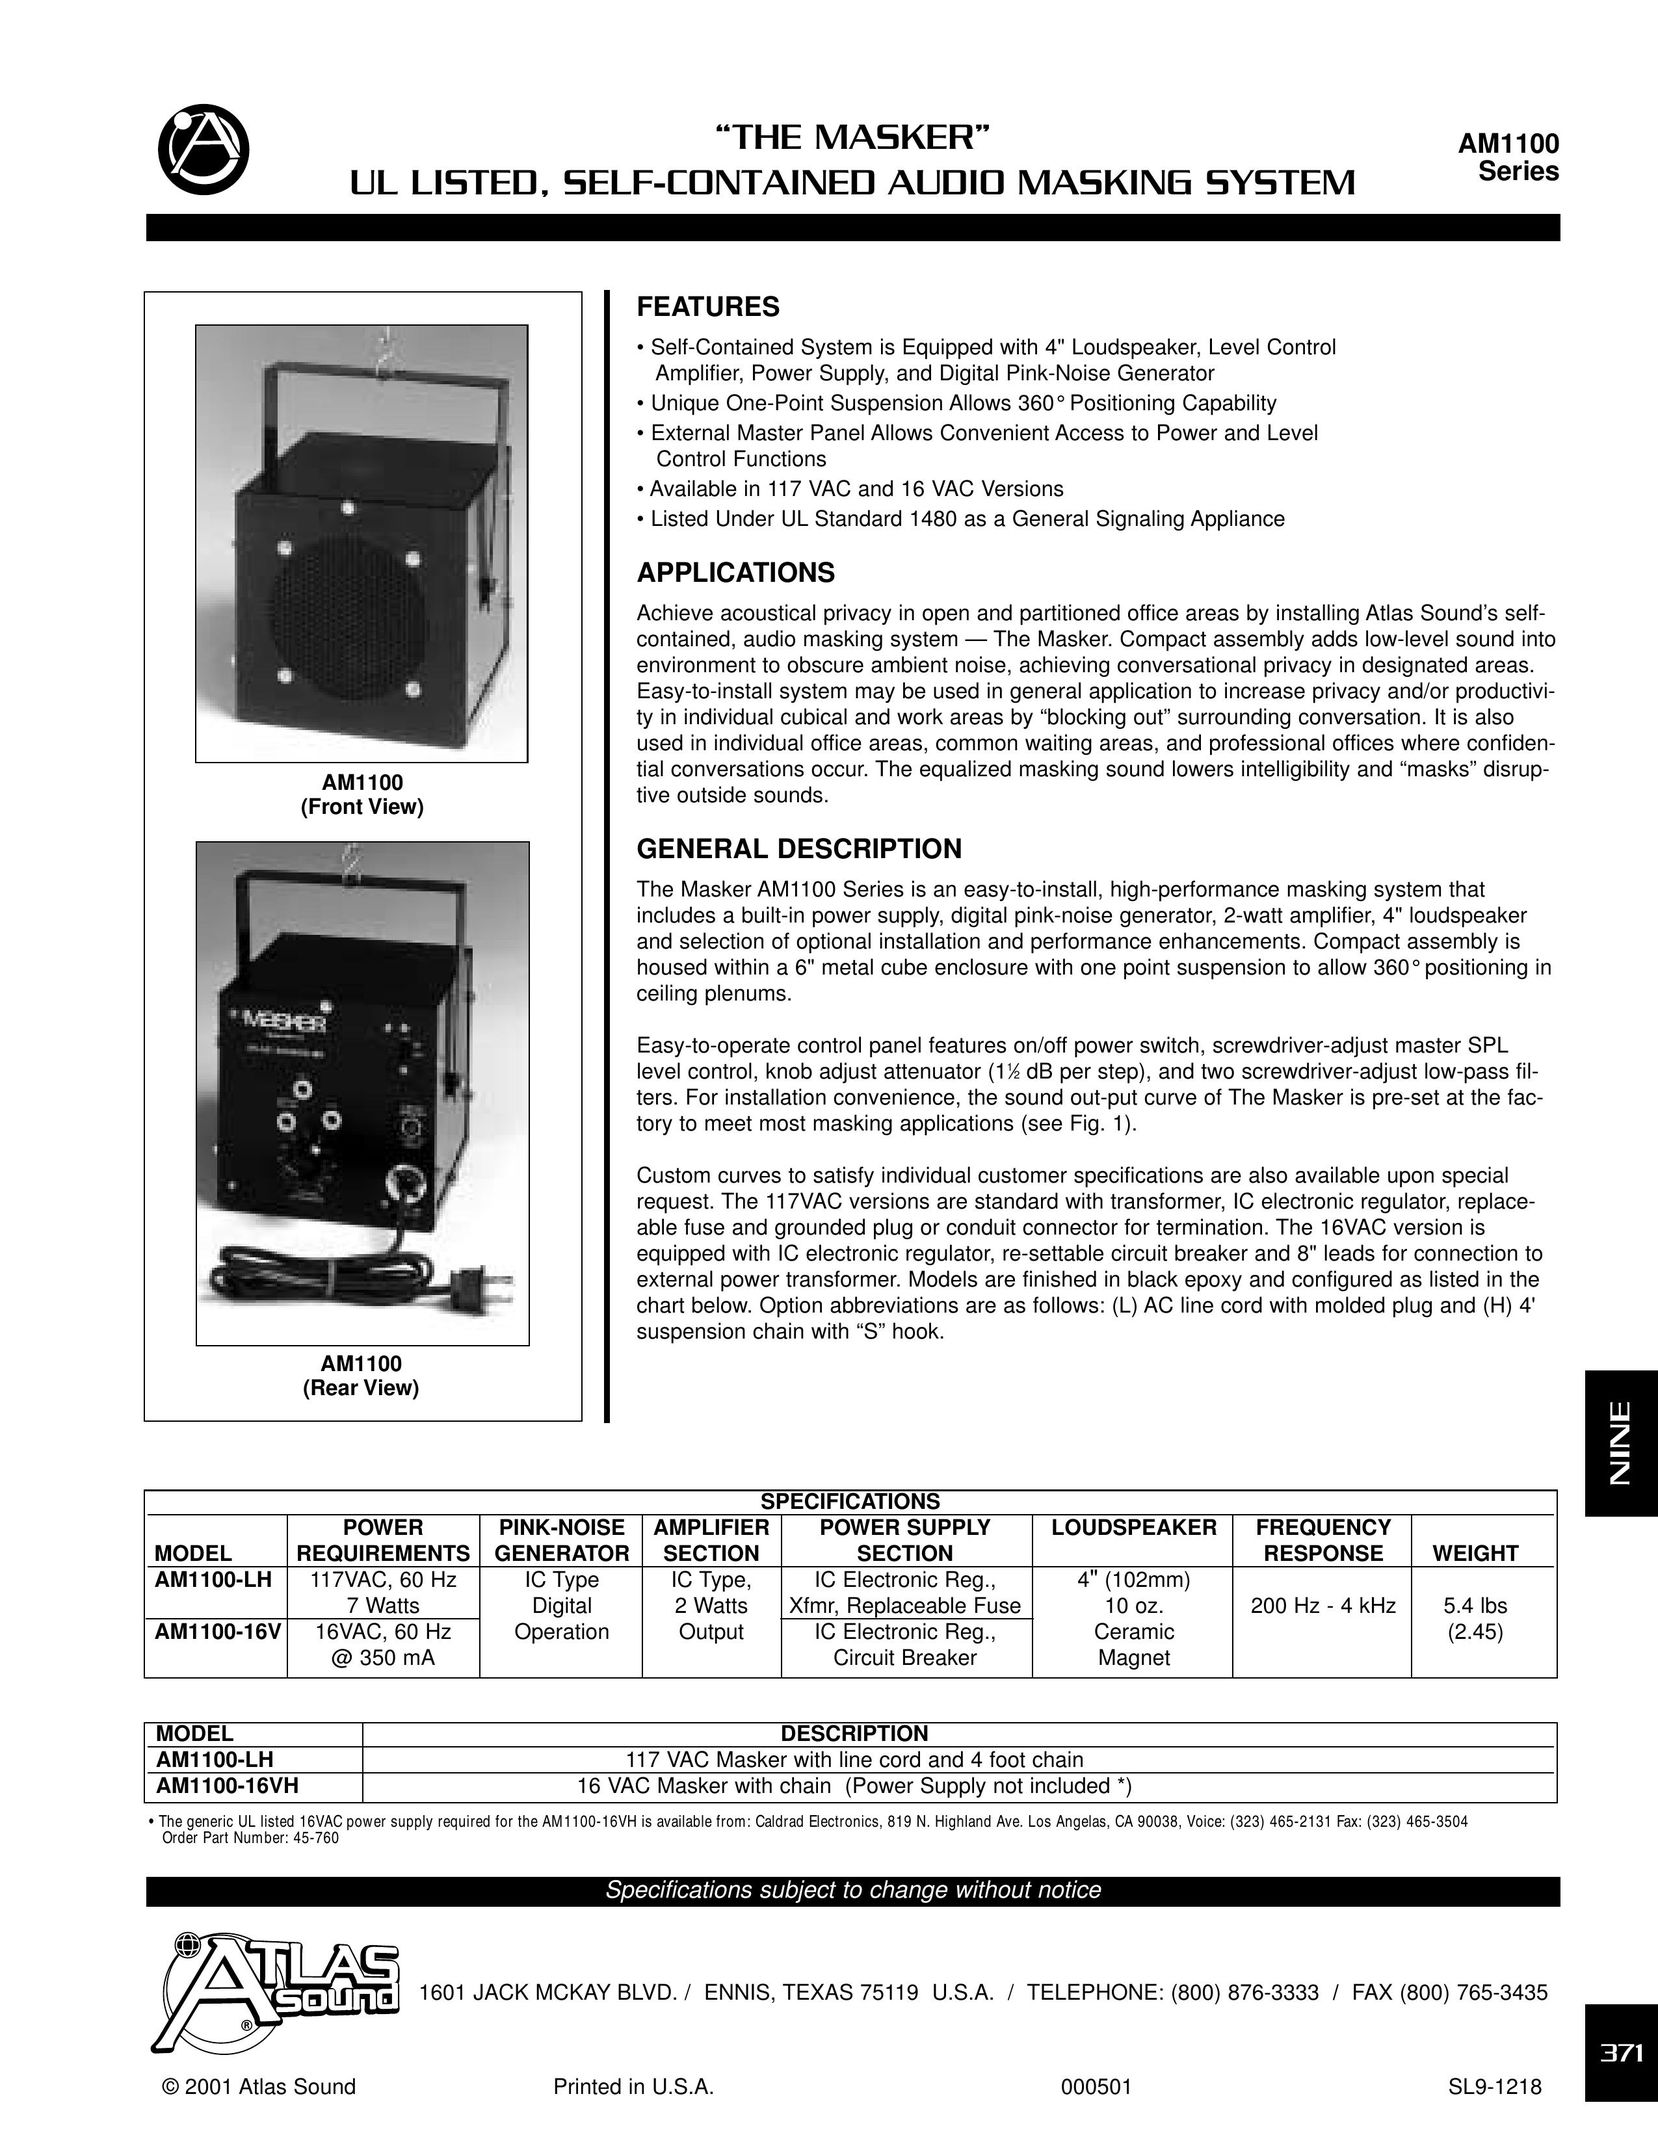 Atlas Sound AM1100 Noise Reduction Machine User Manual